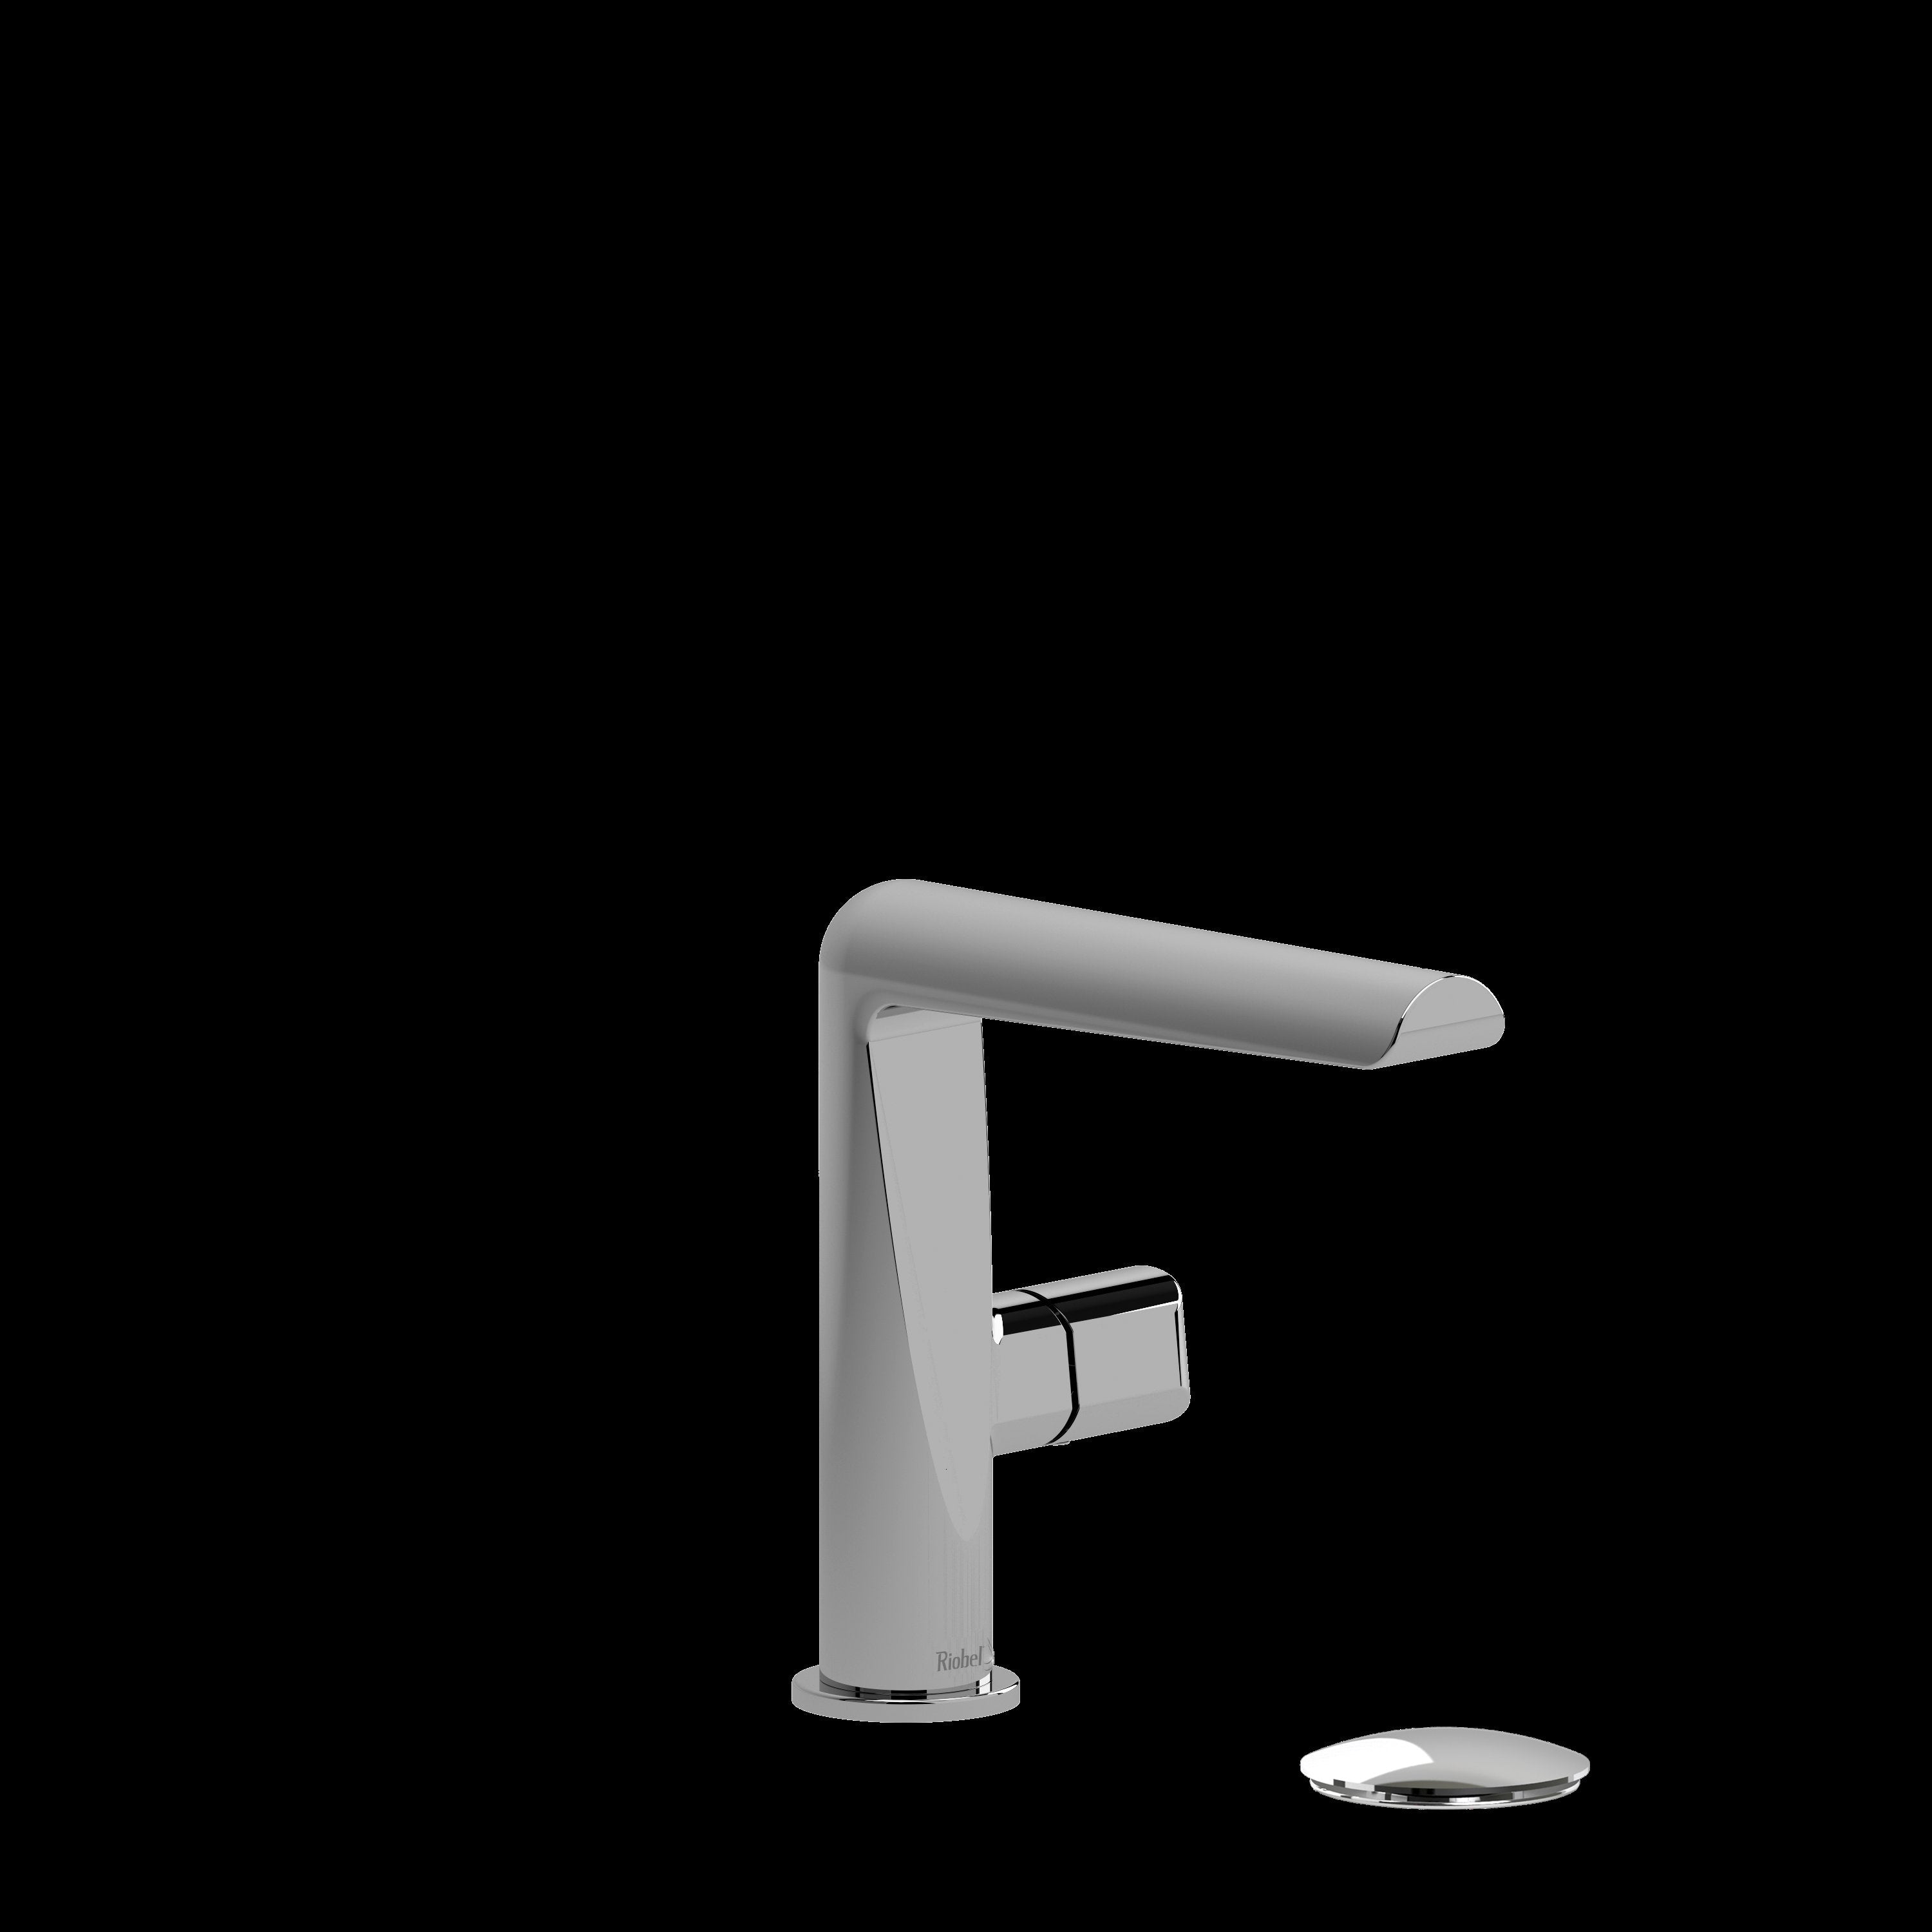 Riobel PBS01C- Single hole lavatory faucet